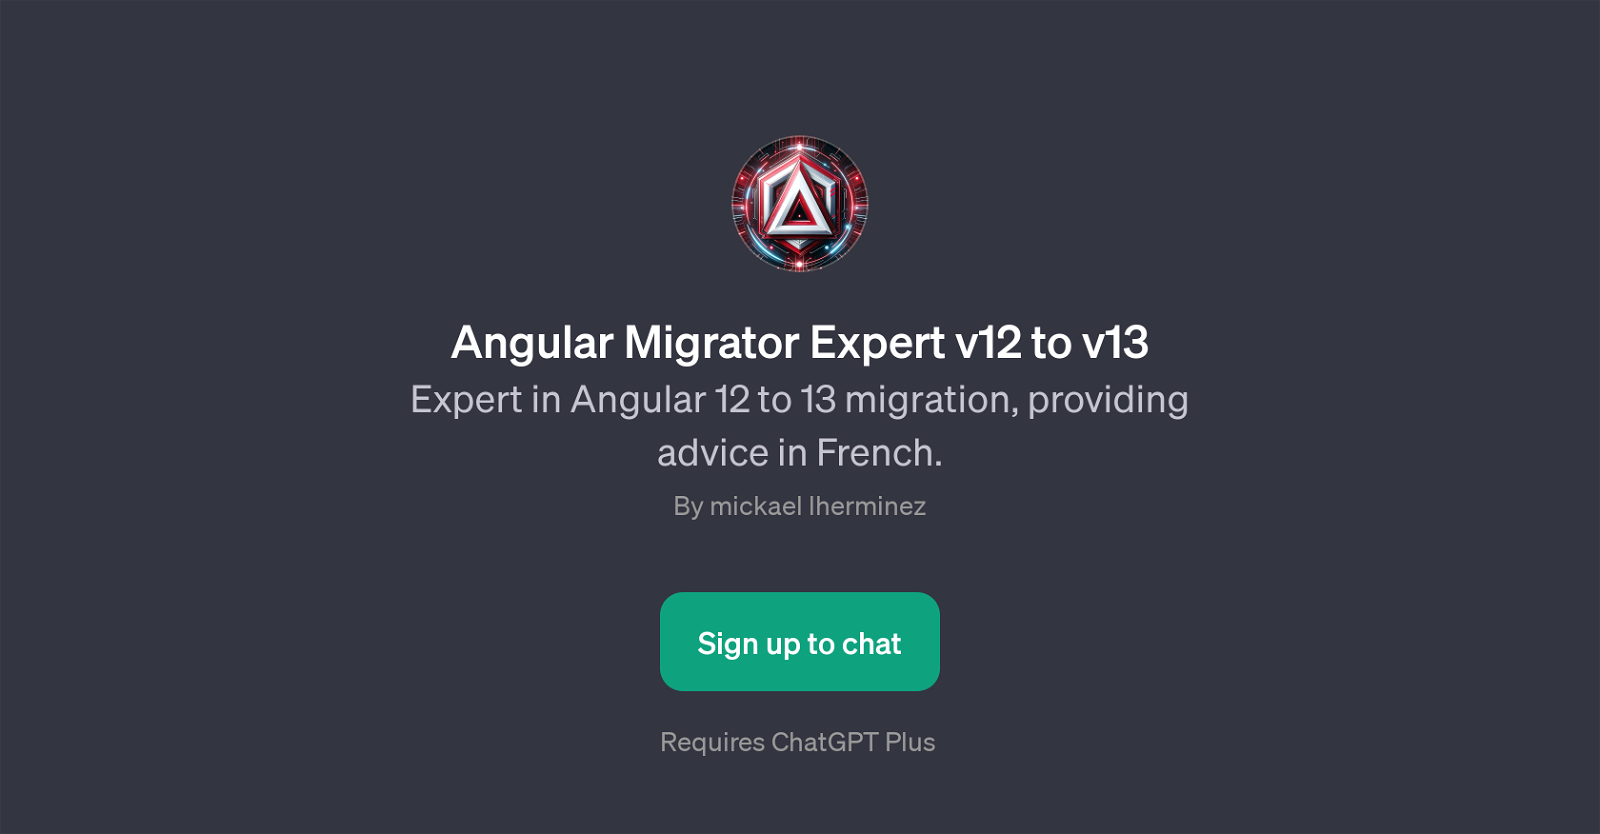 Angular Migrator Expert v12 to v13 website